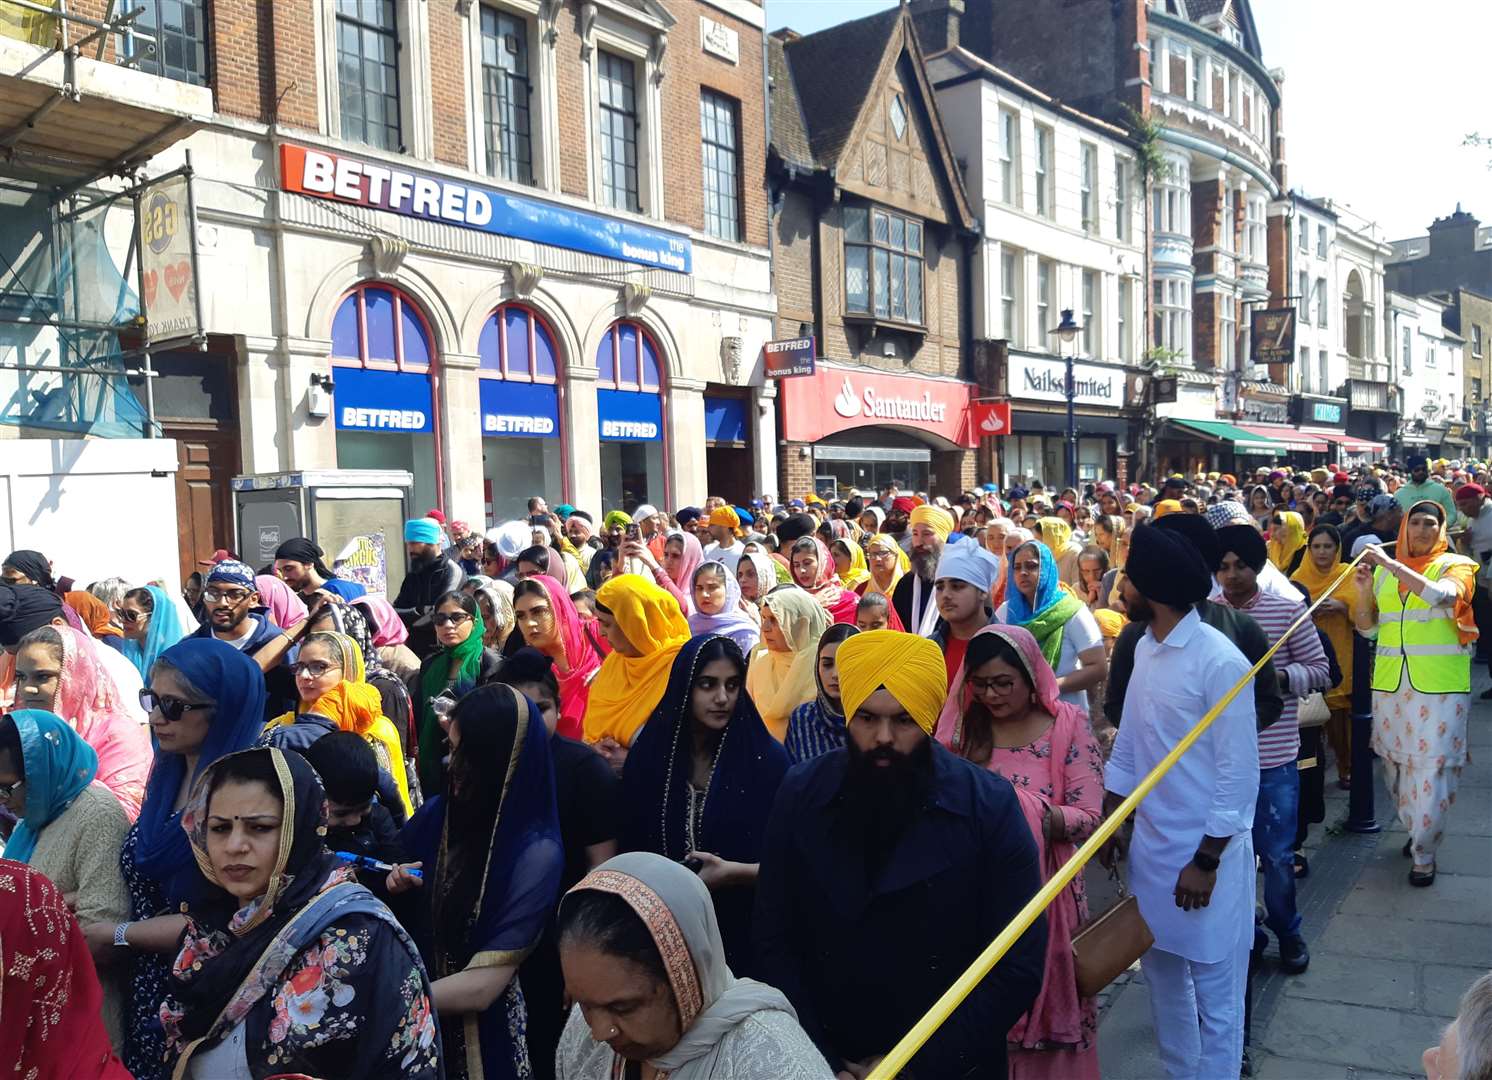 The parade marking the Sikh festival of Vaisakhi went through Gravesend town centre. Photo: Nikki White